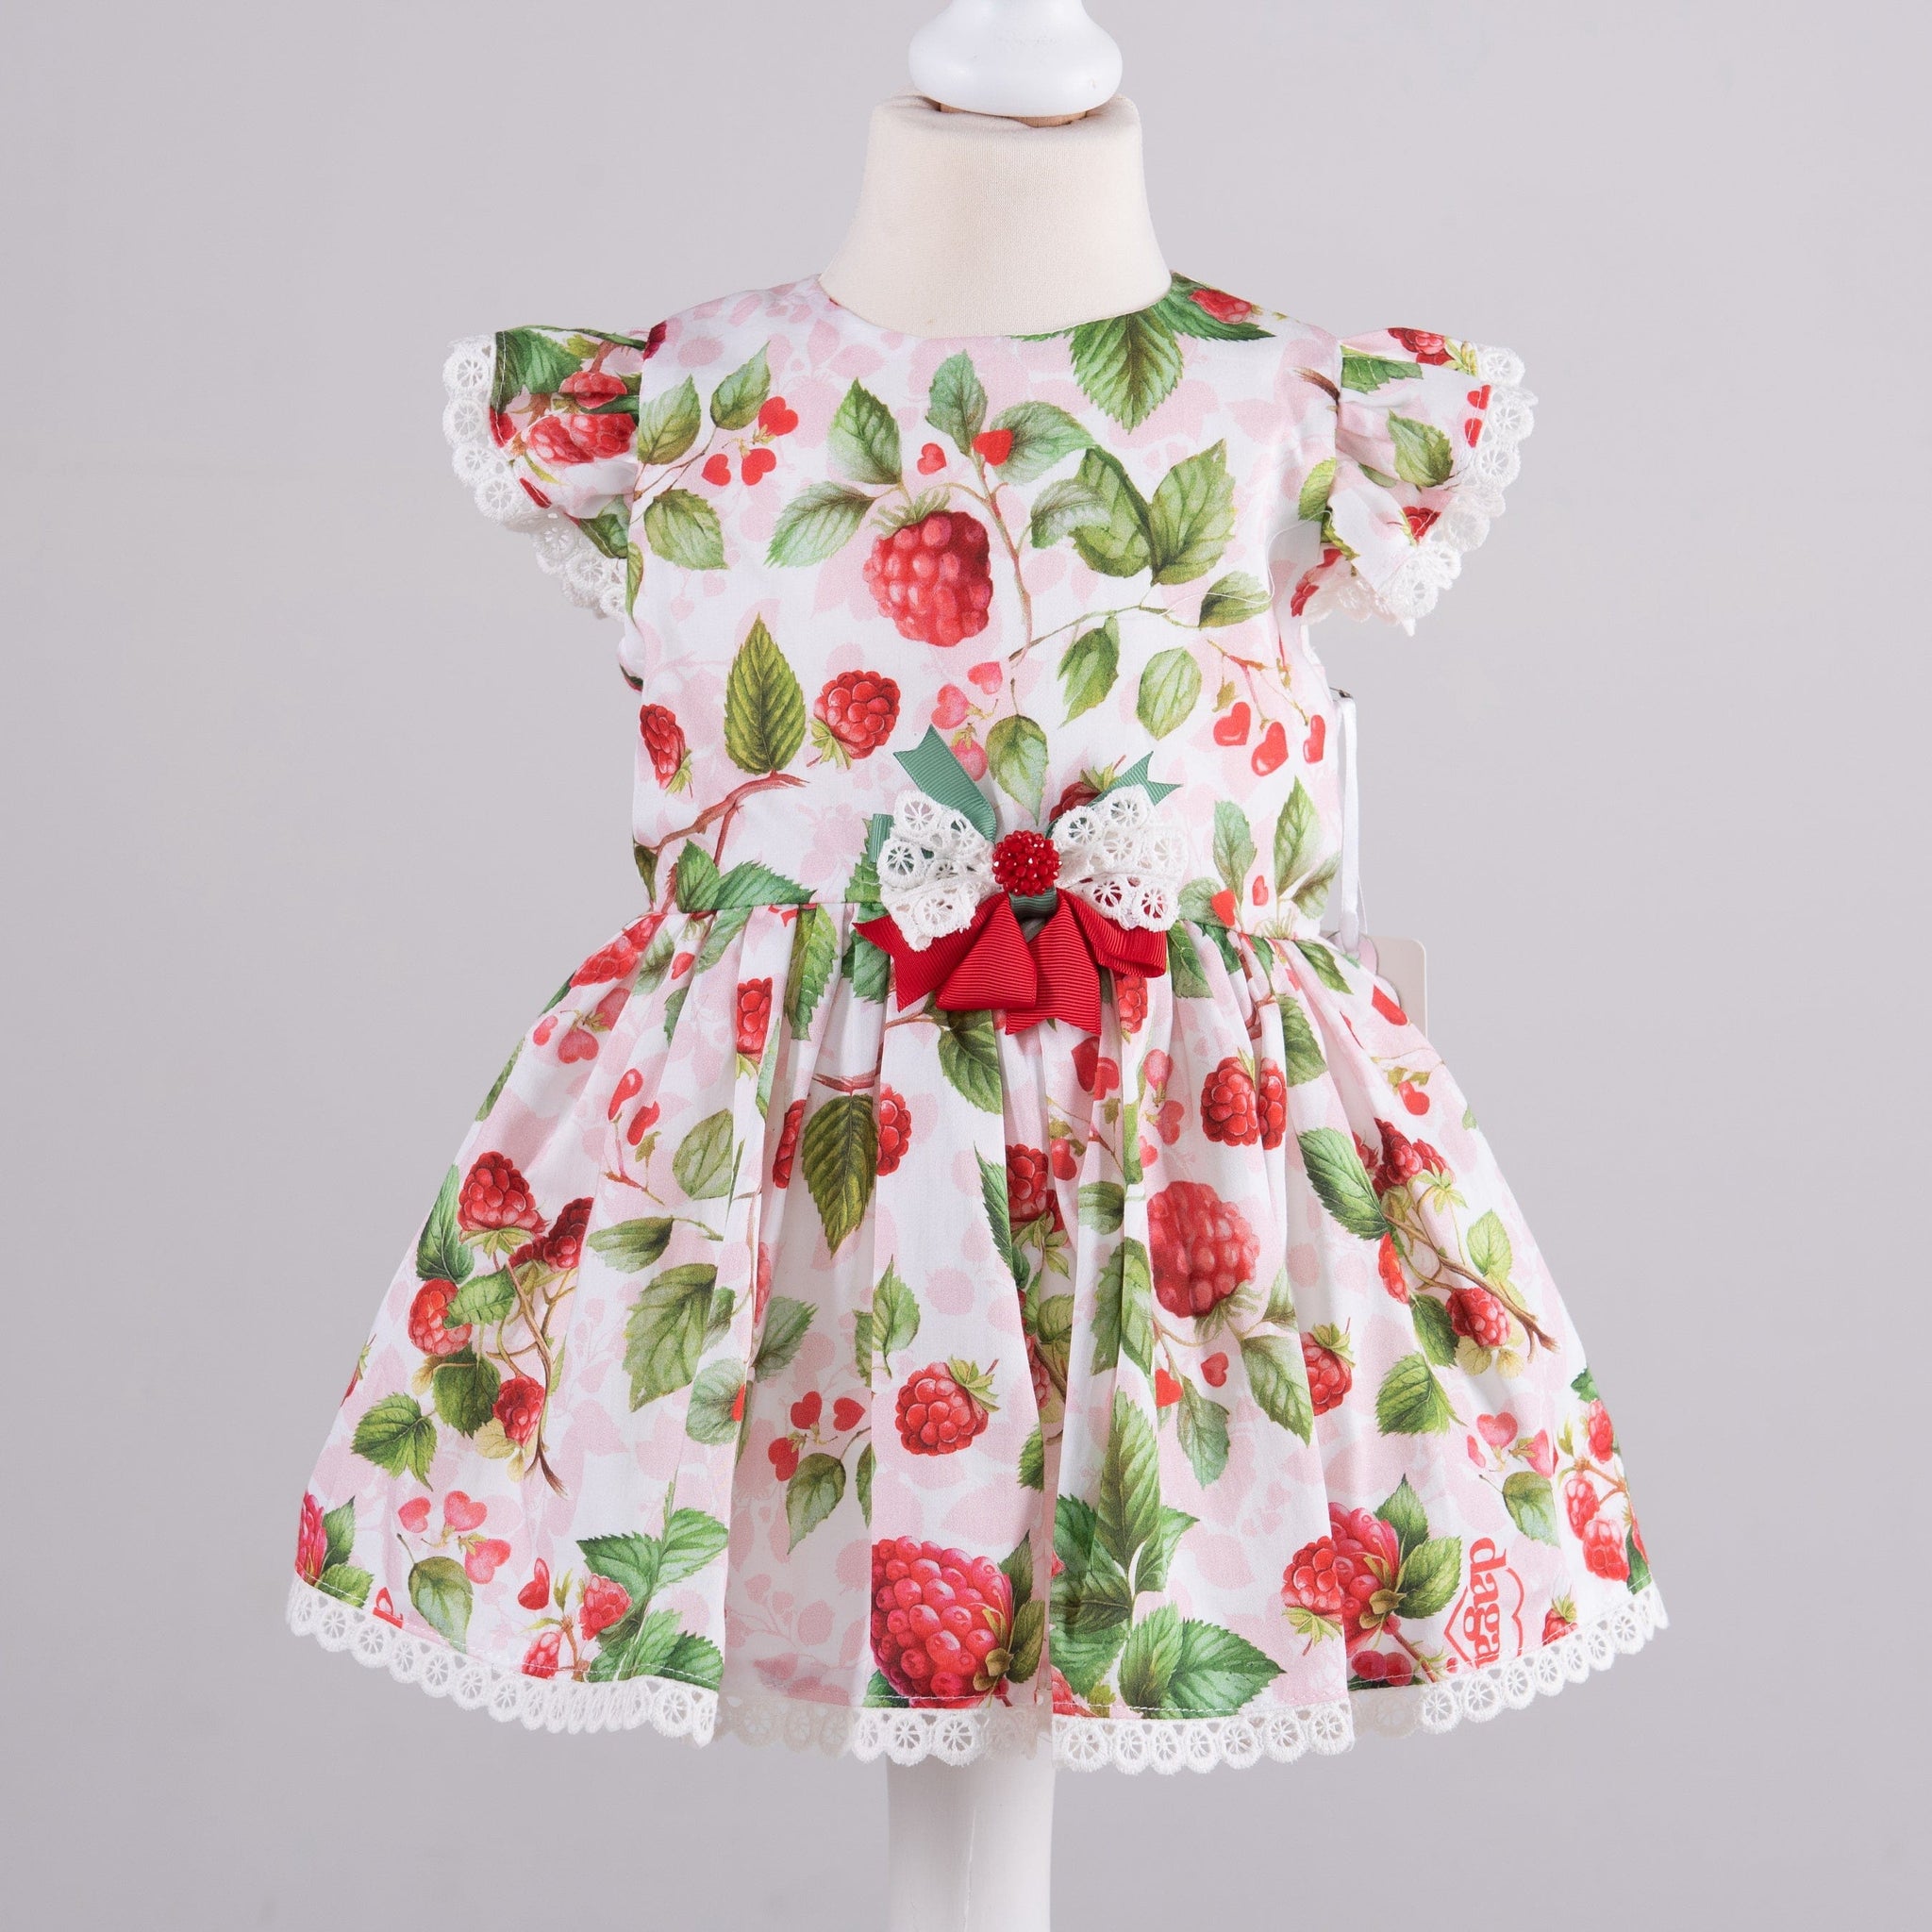 Daga 9m 9647 Daga Baby Girls Floral Print Dress Bloomer Set